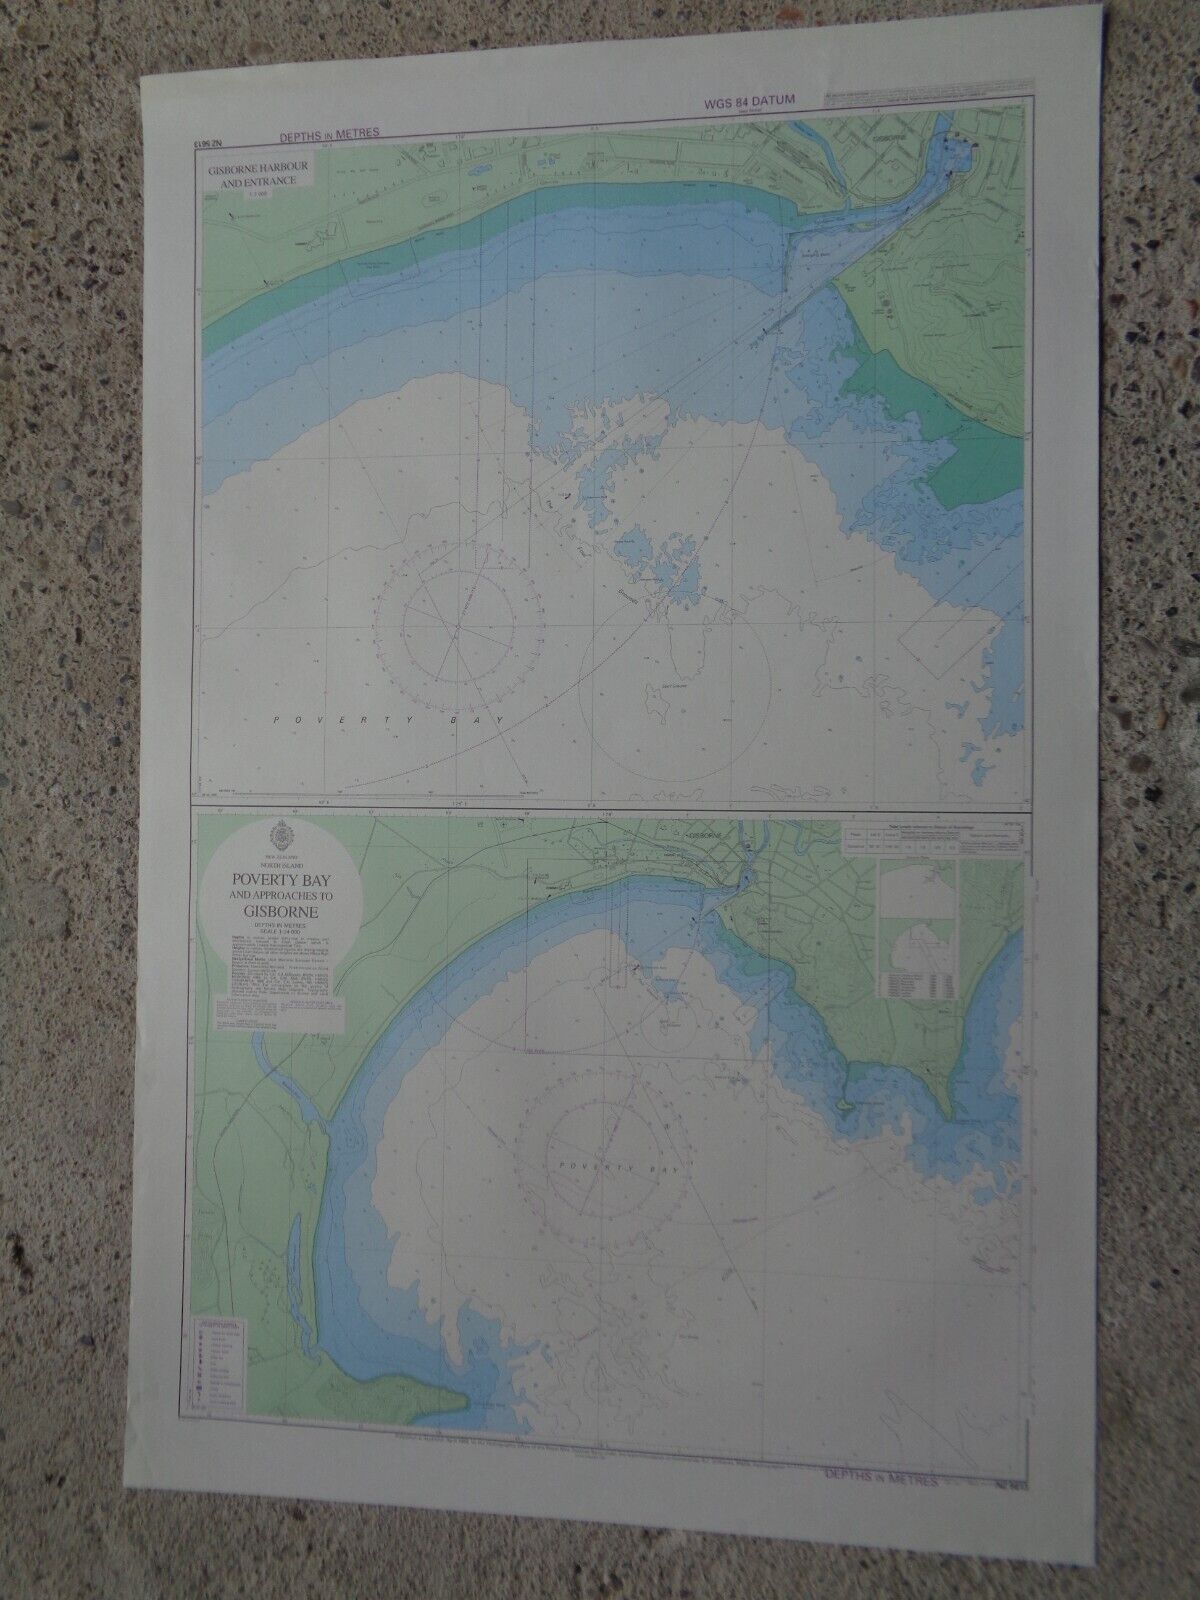 1998 New Zealand MARINE MAP / Poverty Bay and Gisborne